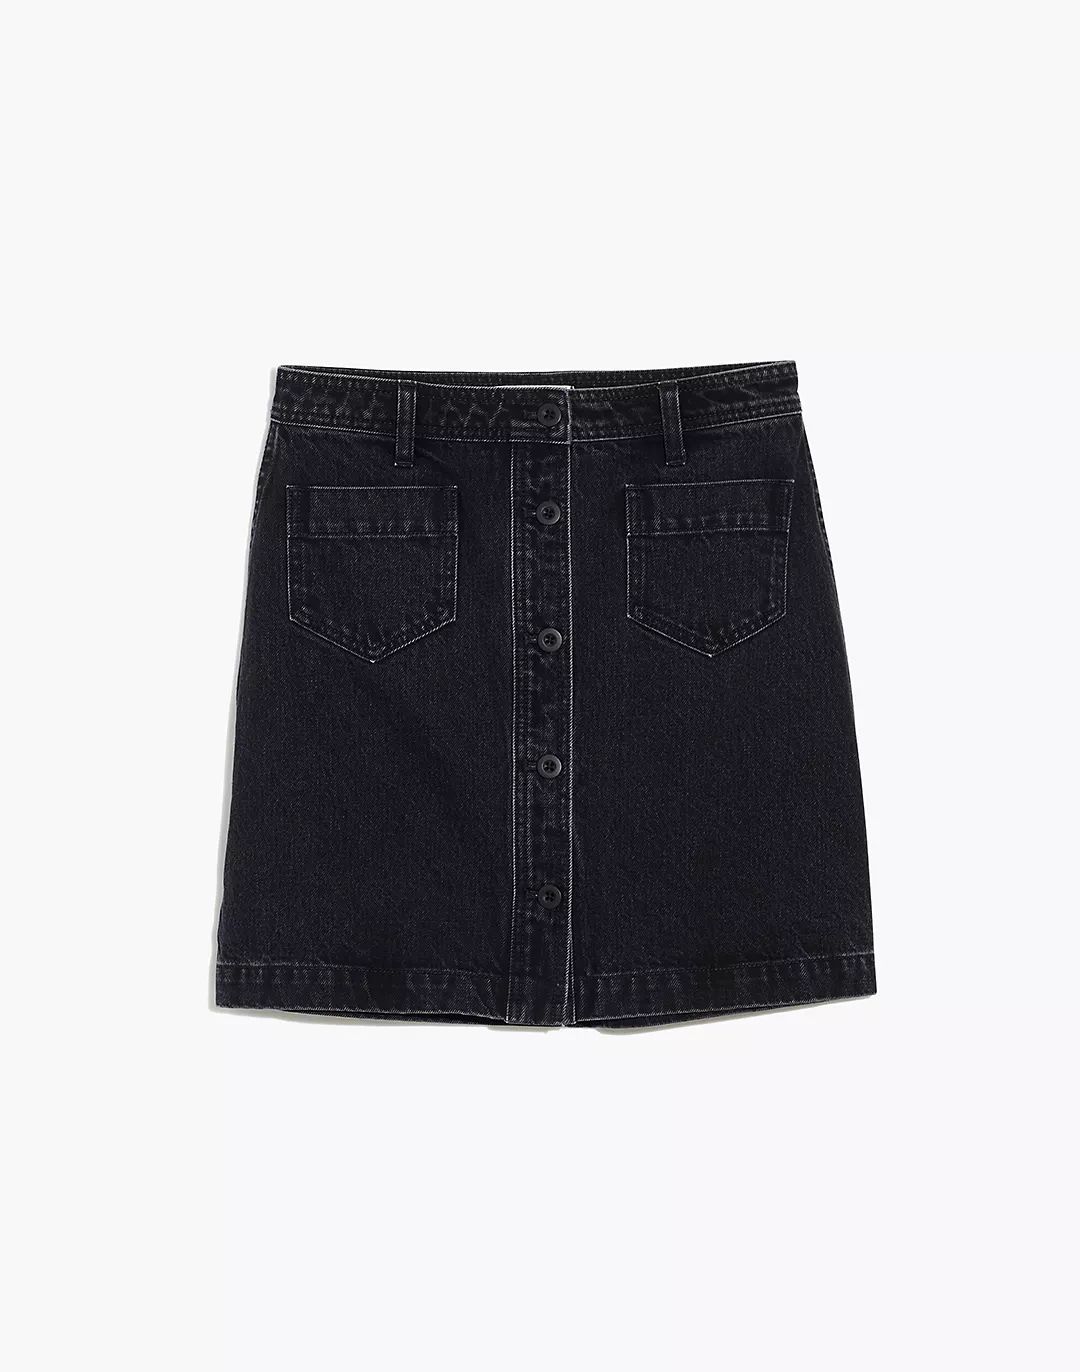 Denim High-Waist Button-Front Mini Skirt in Gilmore Wash | Madewell